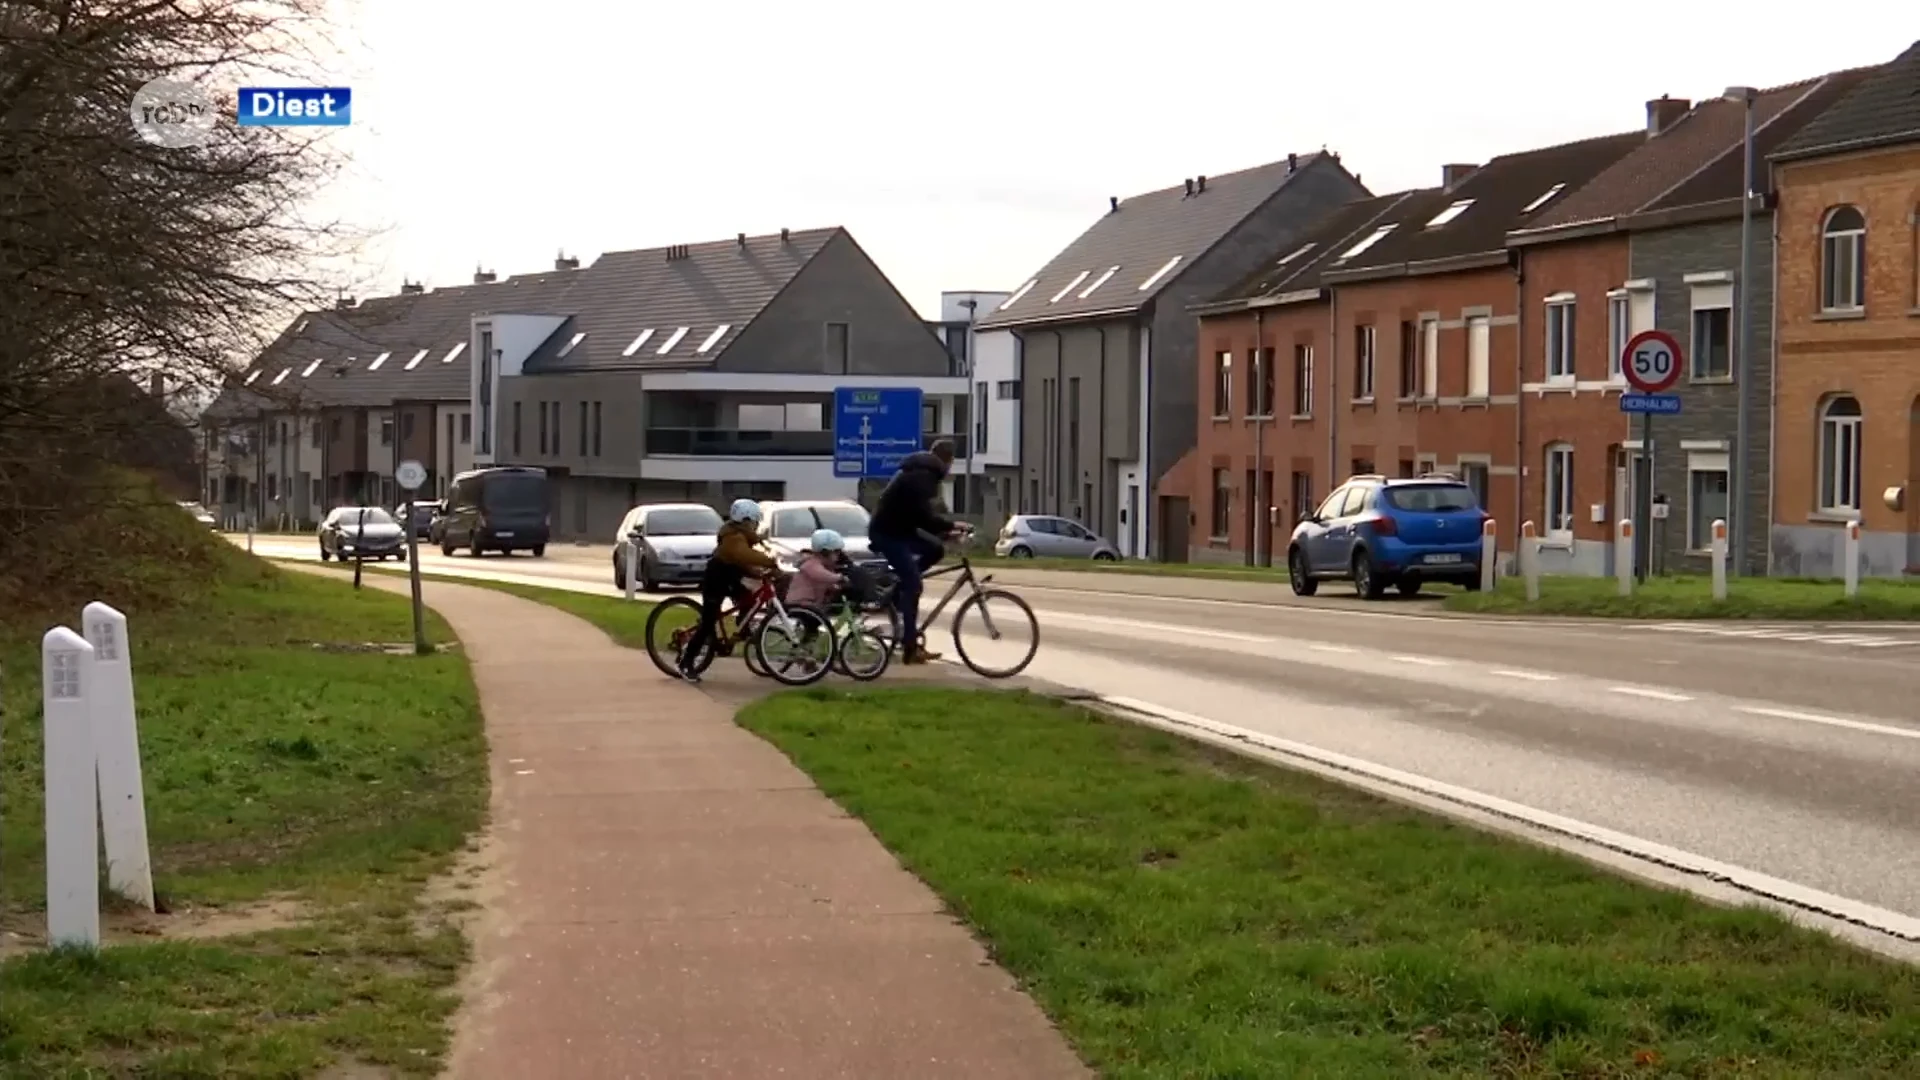 Kruispunt van Citadellaan met Steineweg in Diest krijgt verkeerseiland voor fietsers